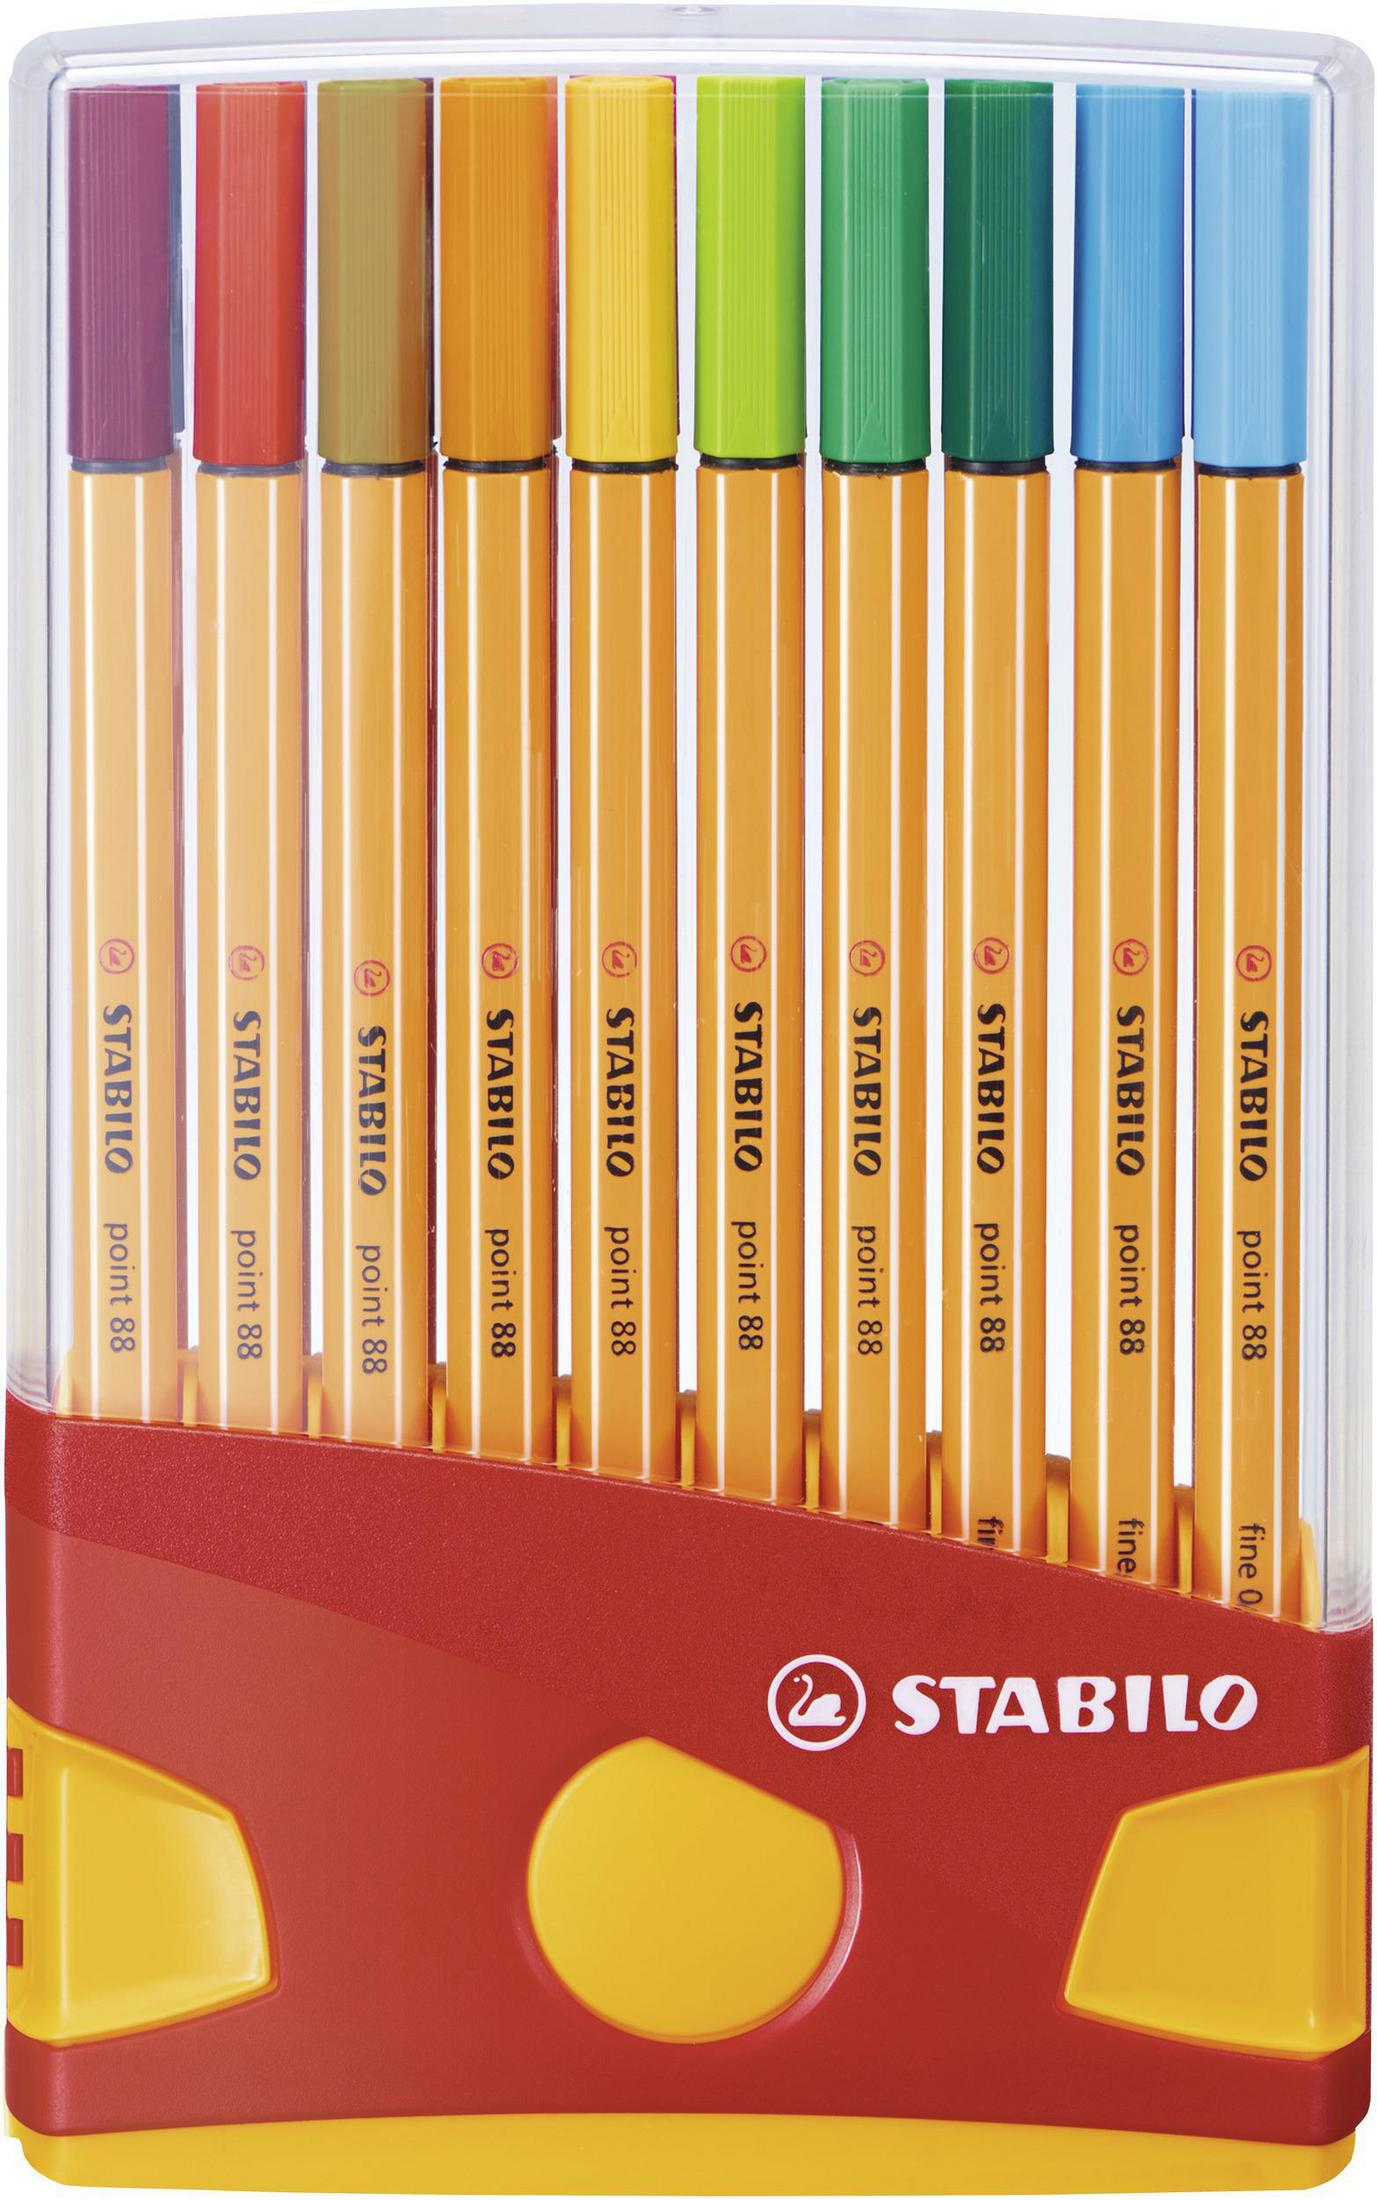 Bunt (20 POINT Farben) STABILO STABILO 20ER Fineliner, 8820-03 COLORPARADE 88